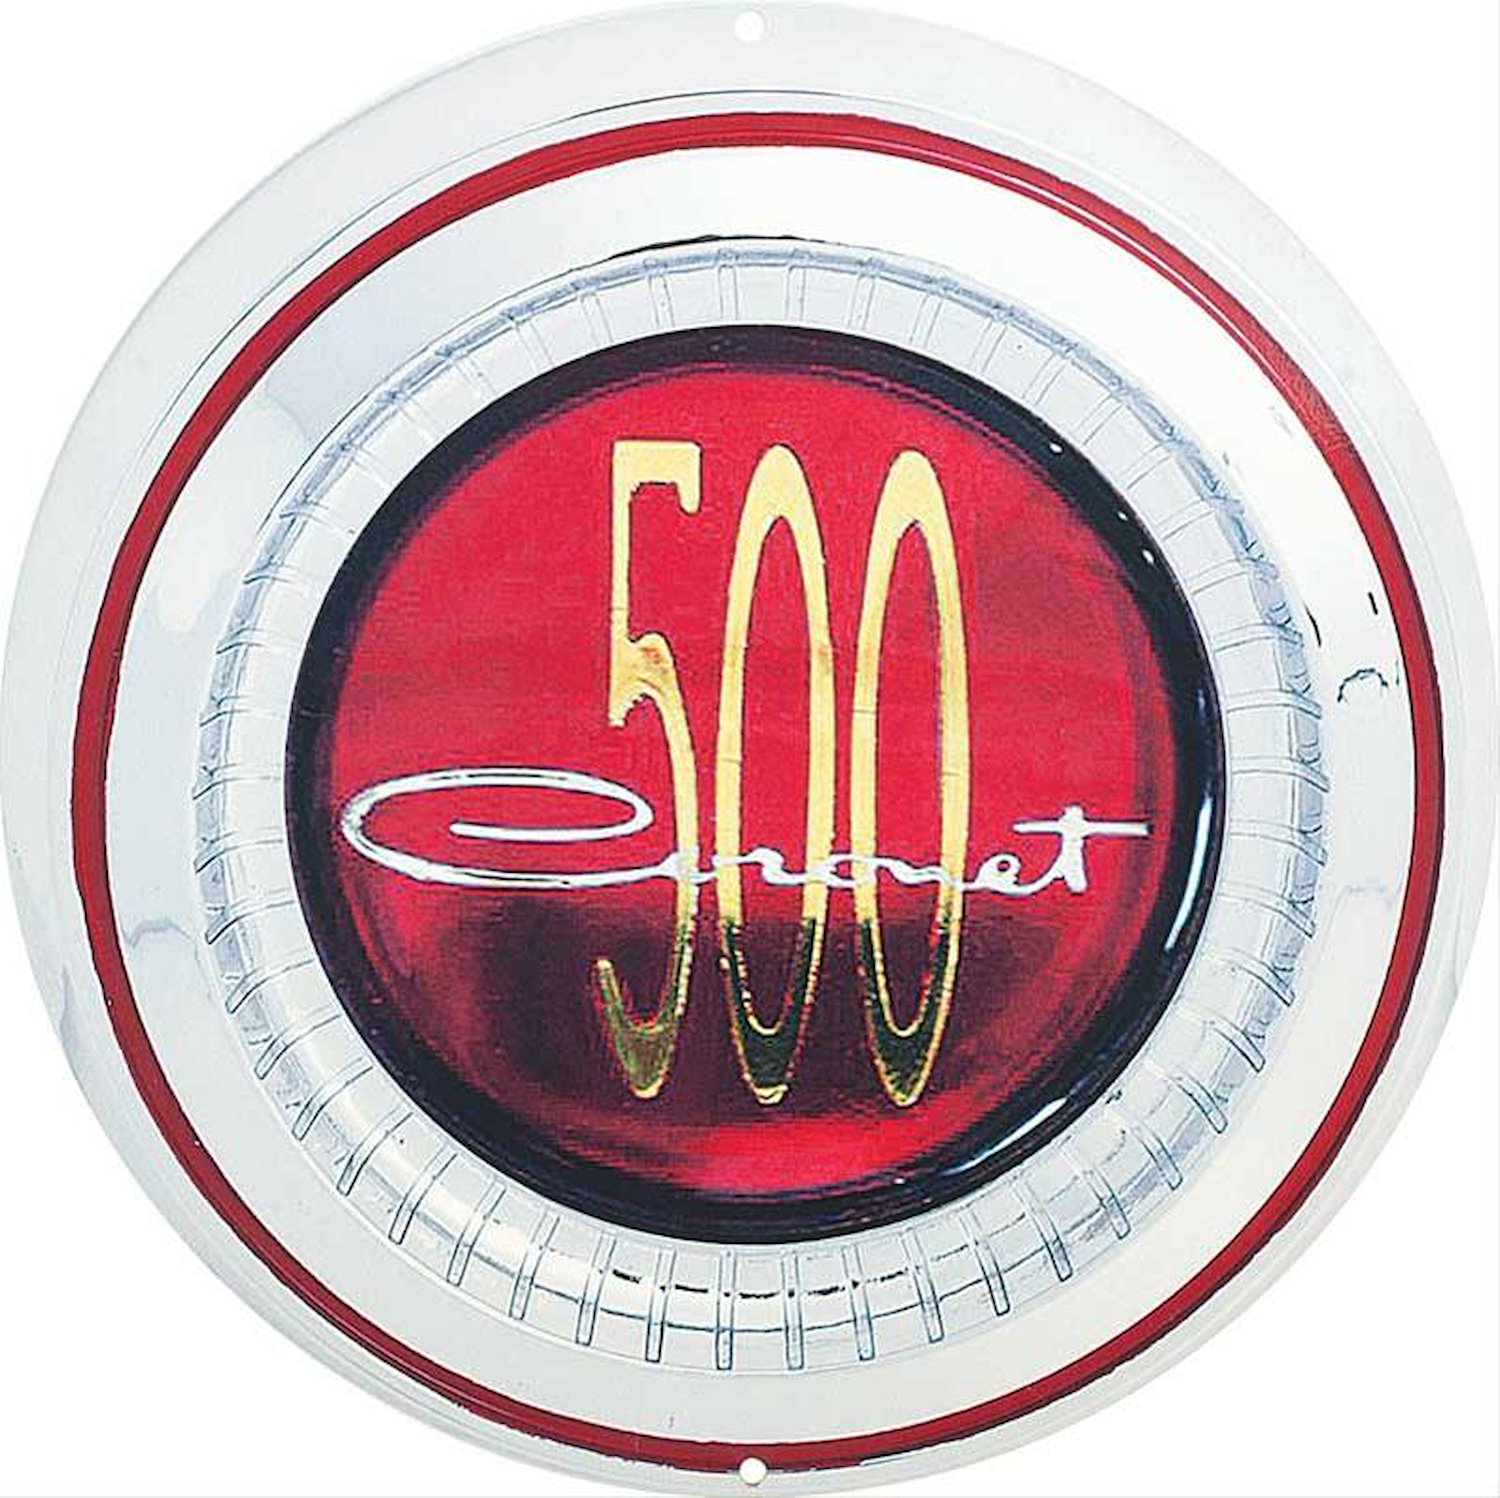 PS500124 Metal Sign Photorealistic; Coronet 500 Medallion; Measures 12" X 12"